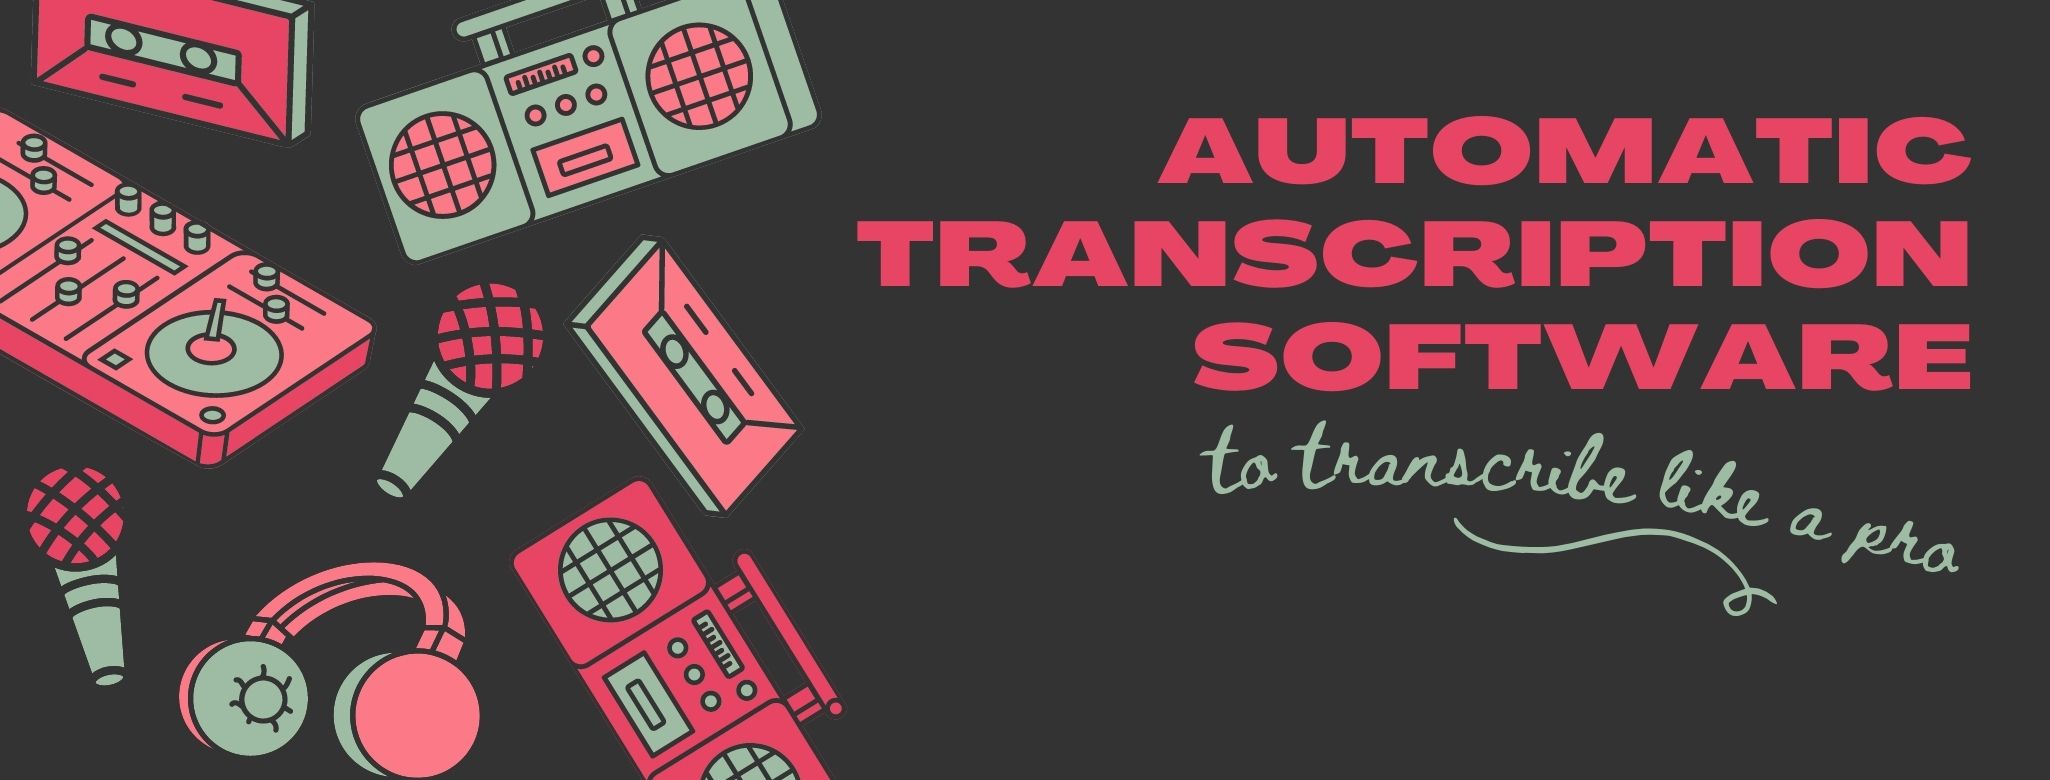 automatic-transcription-header